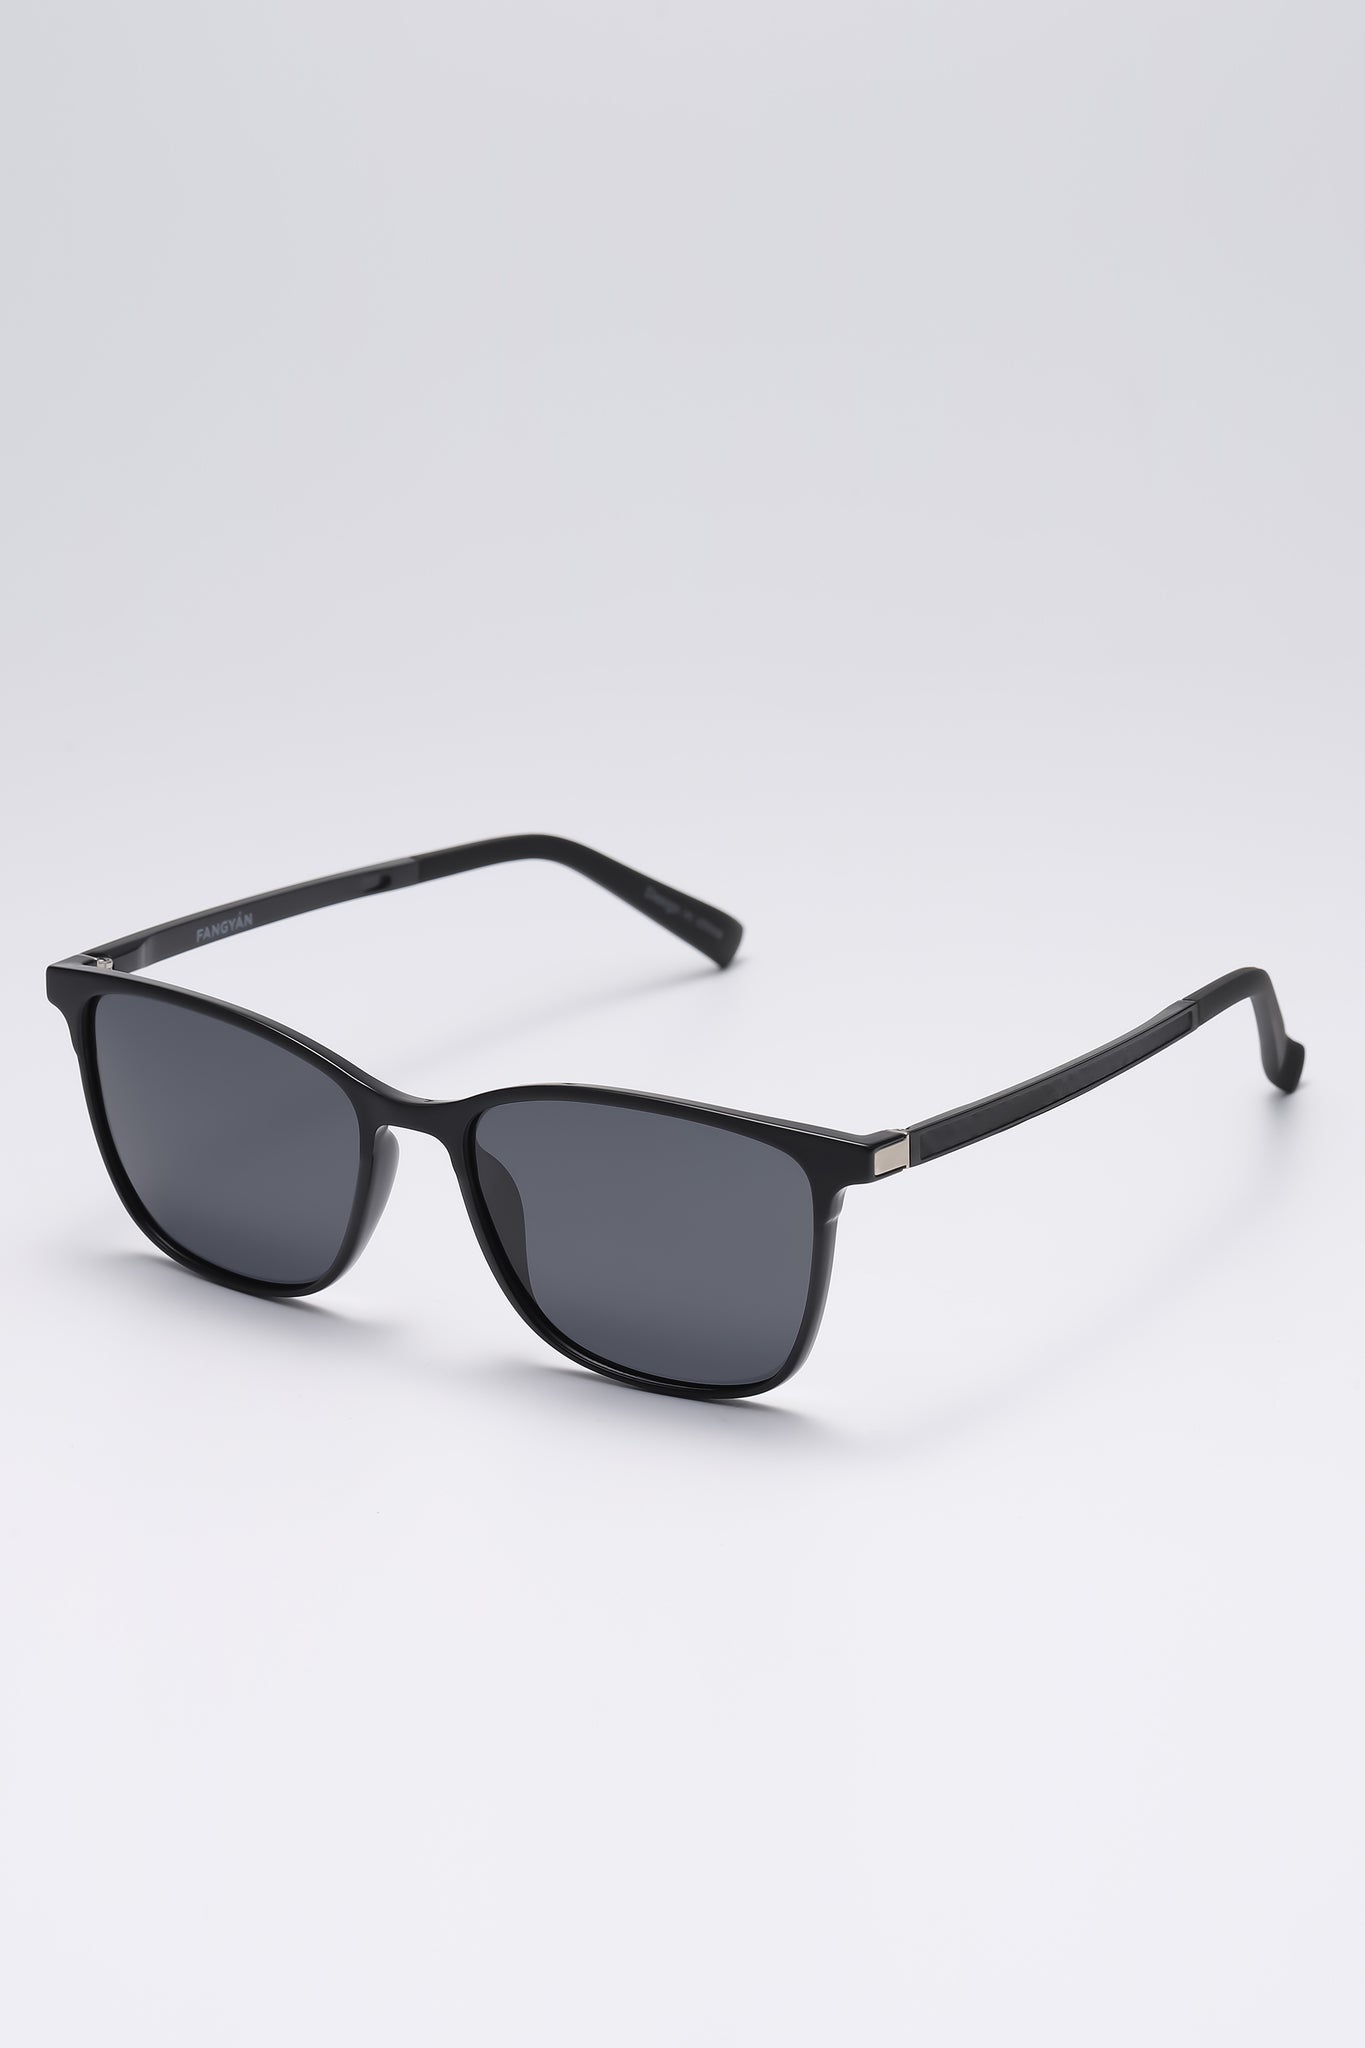 Fangyan | Thin Rectanglar Black Sunglasses